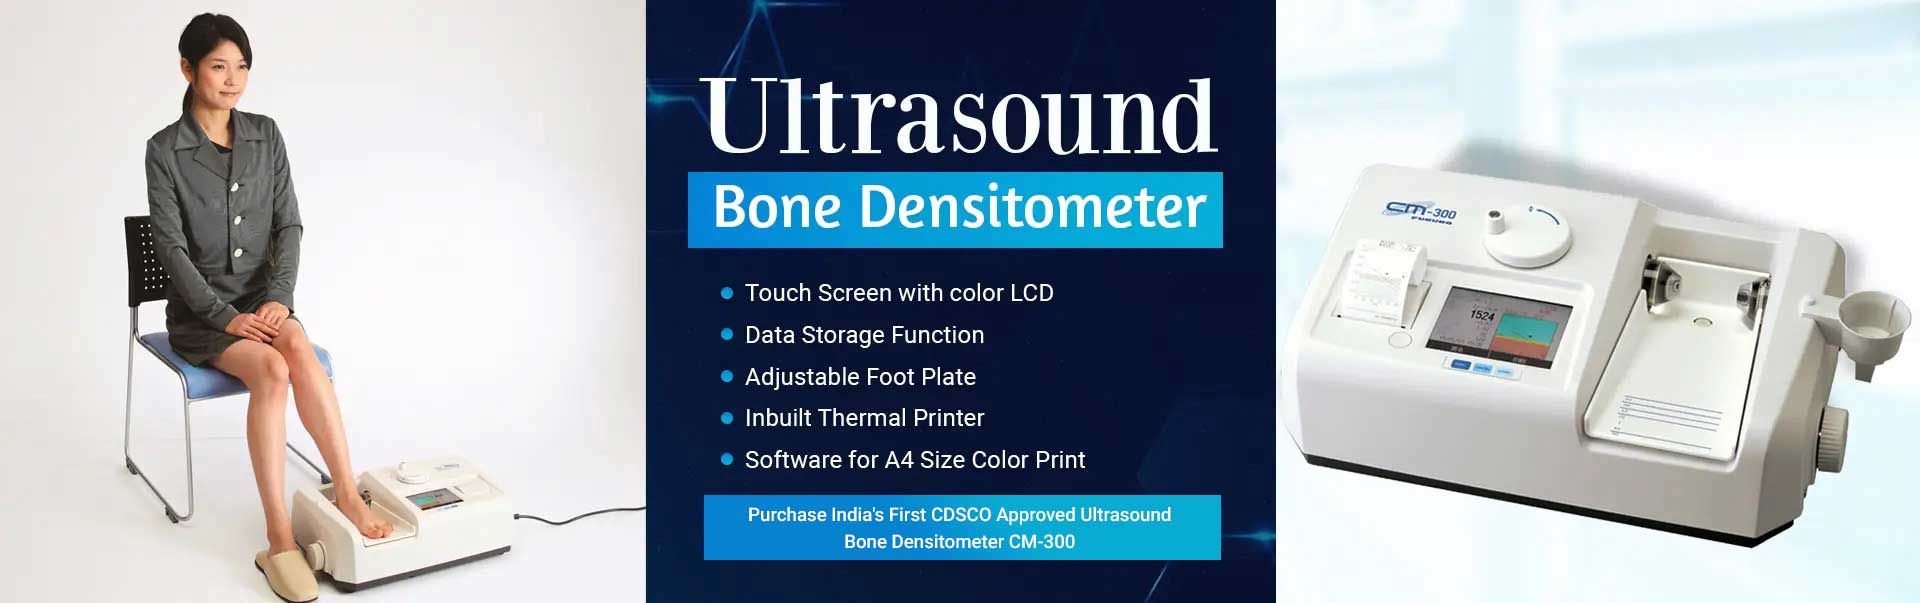 Ultrasound Bone Densitometer Manufacturers in Pimpri Chinchwad